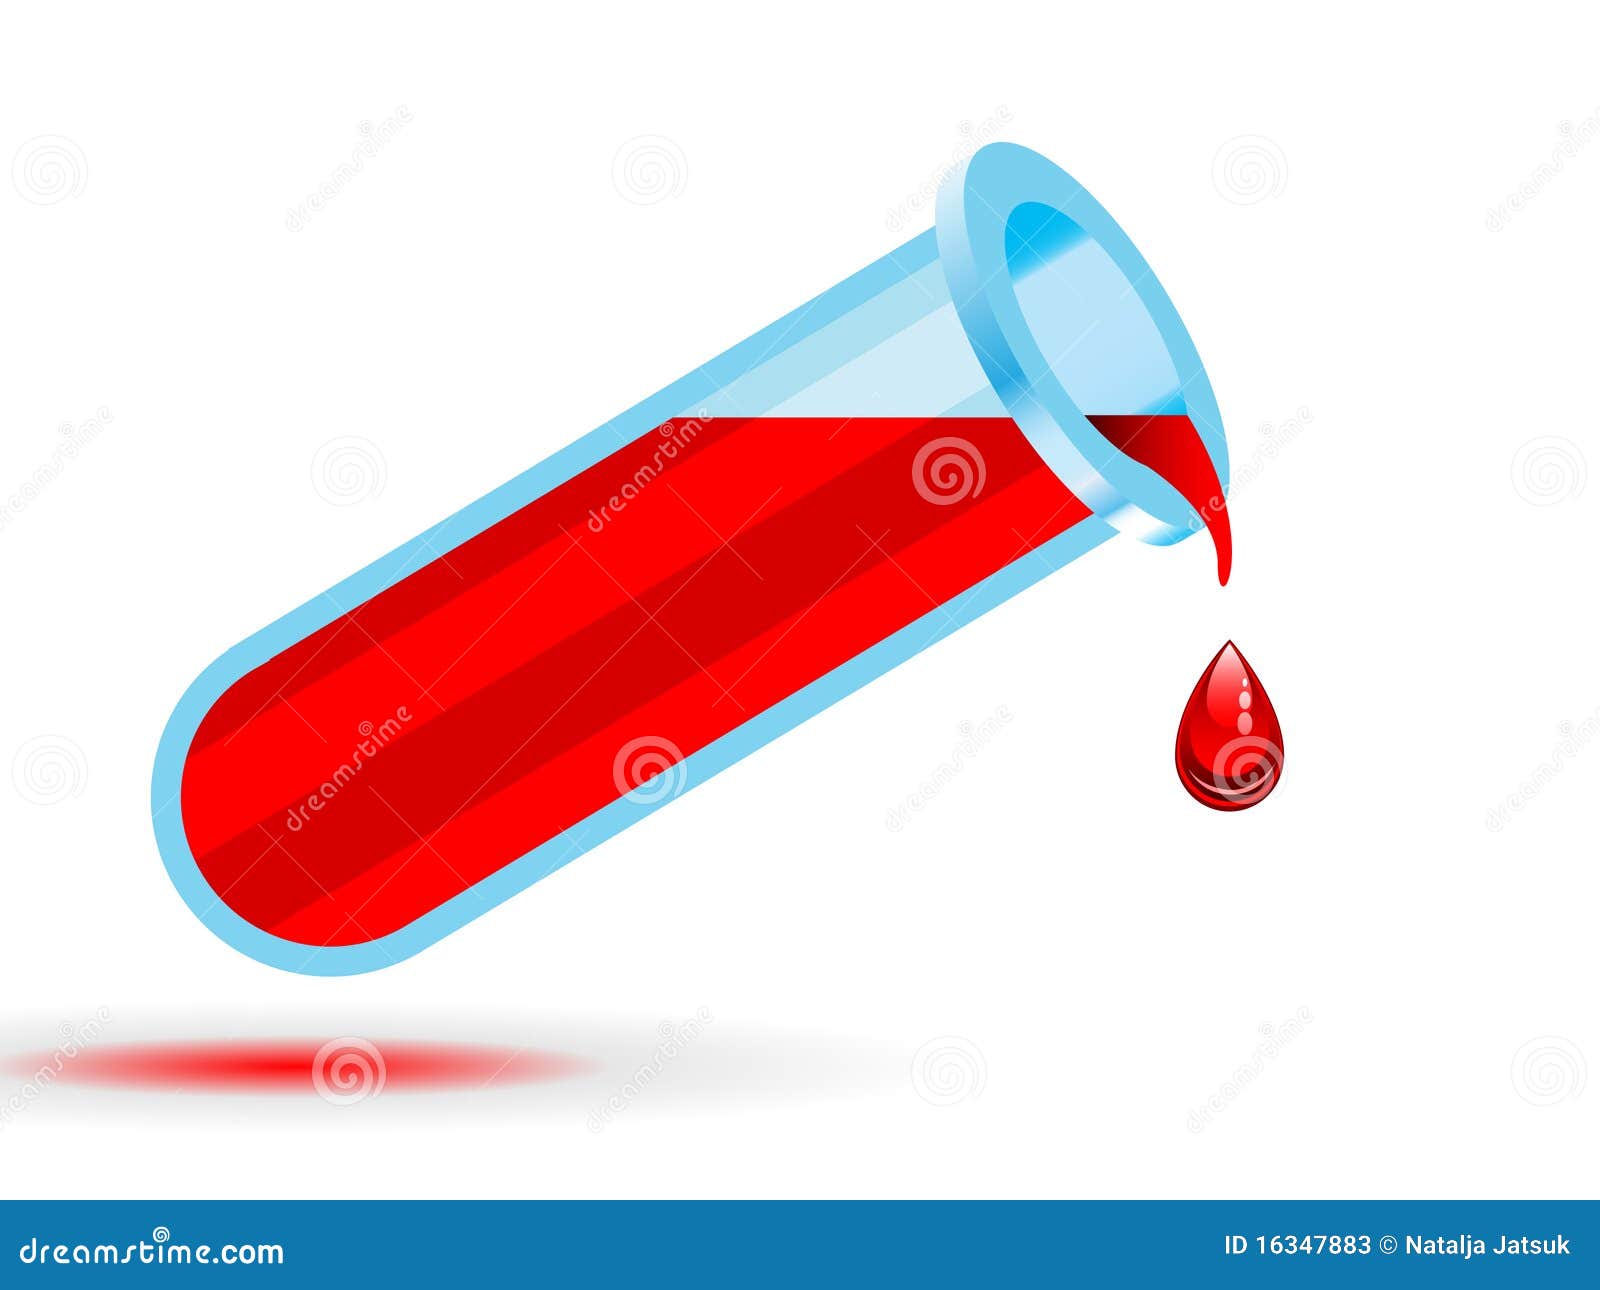 clipart blood vial - photo #44